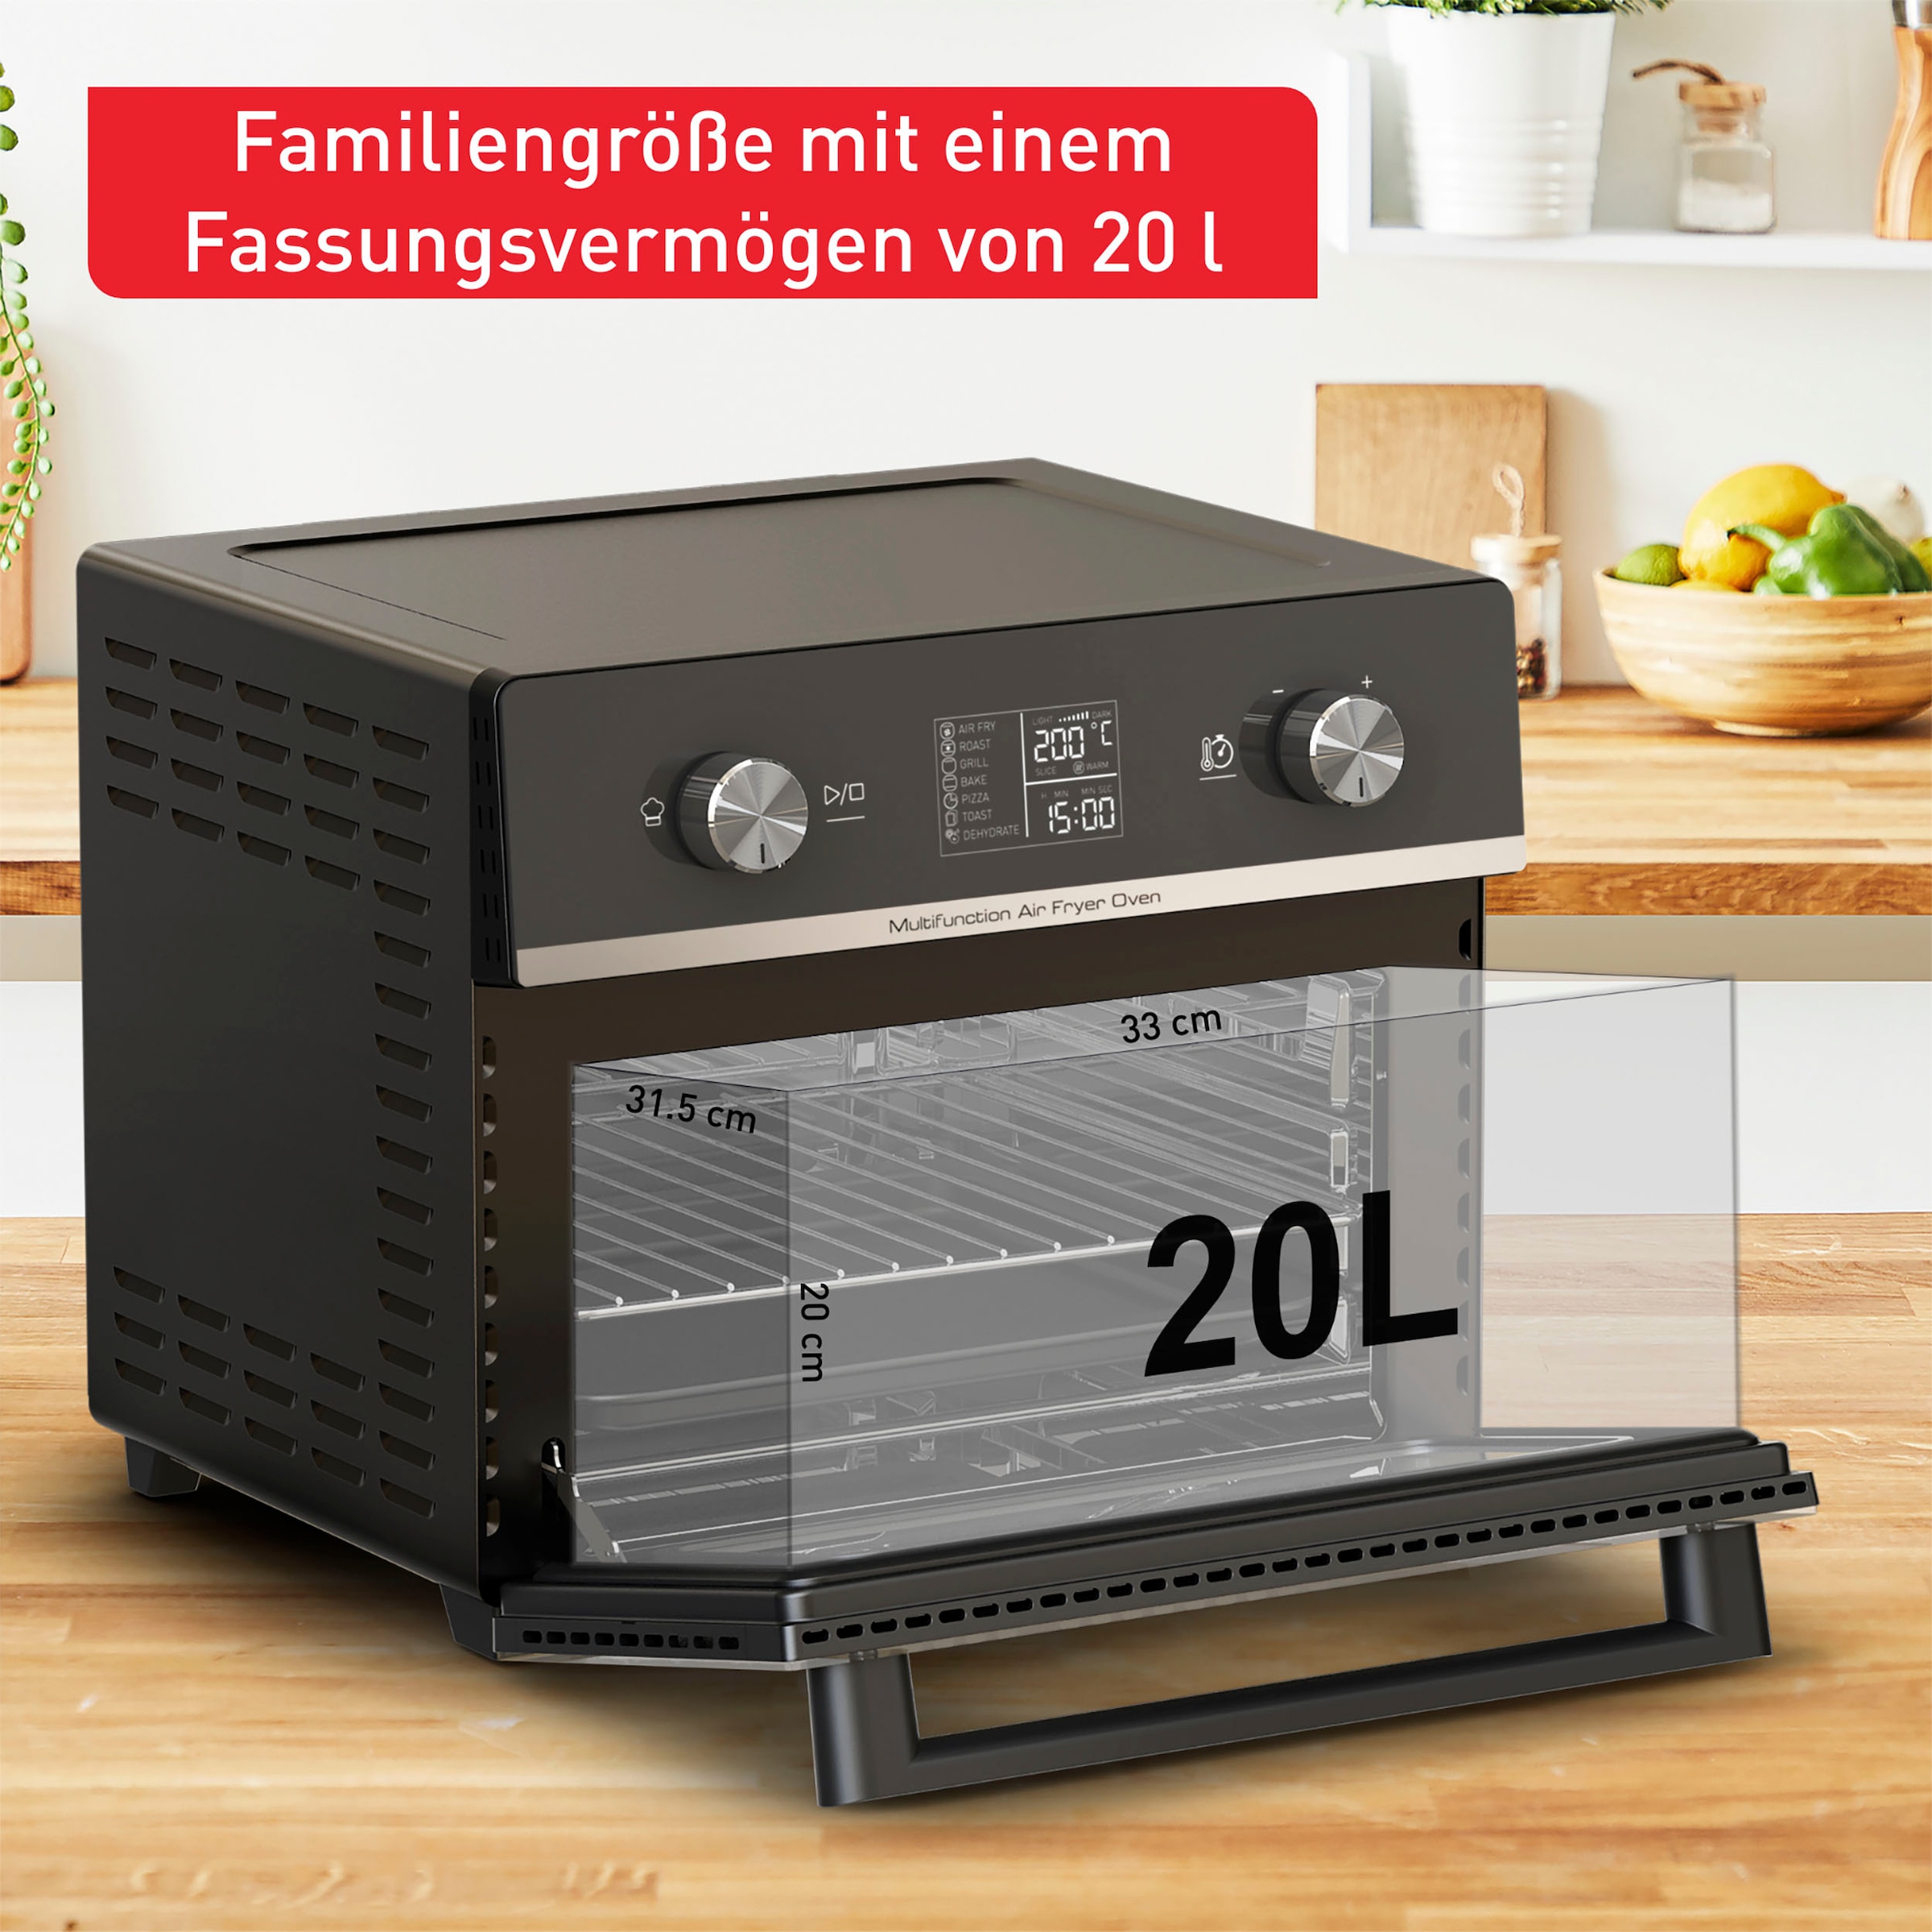 Tefal Heißluftfritteuse »FW6058 Multifunction Air Fryer Oven und  Multifunktionsofen«, 1800 W | BAUR